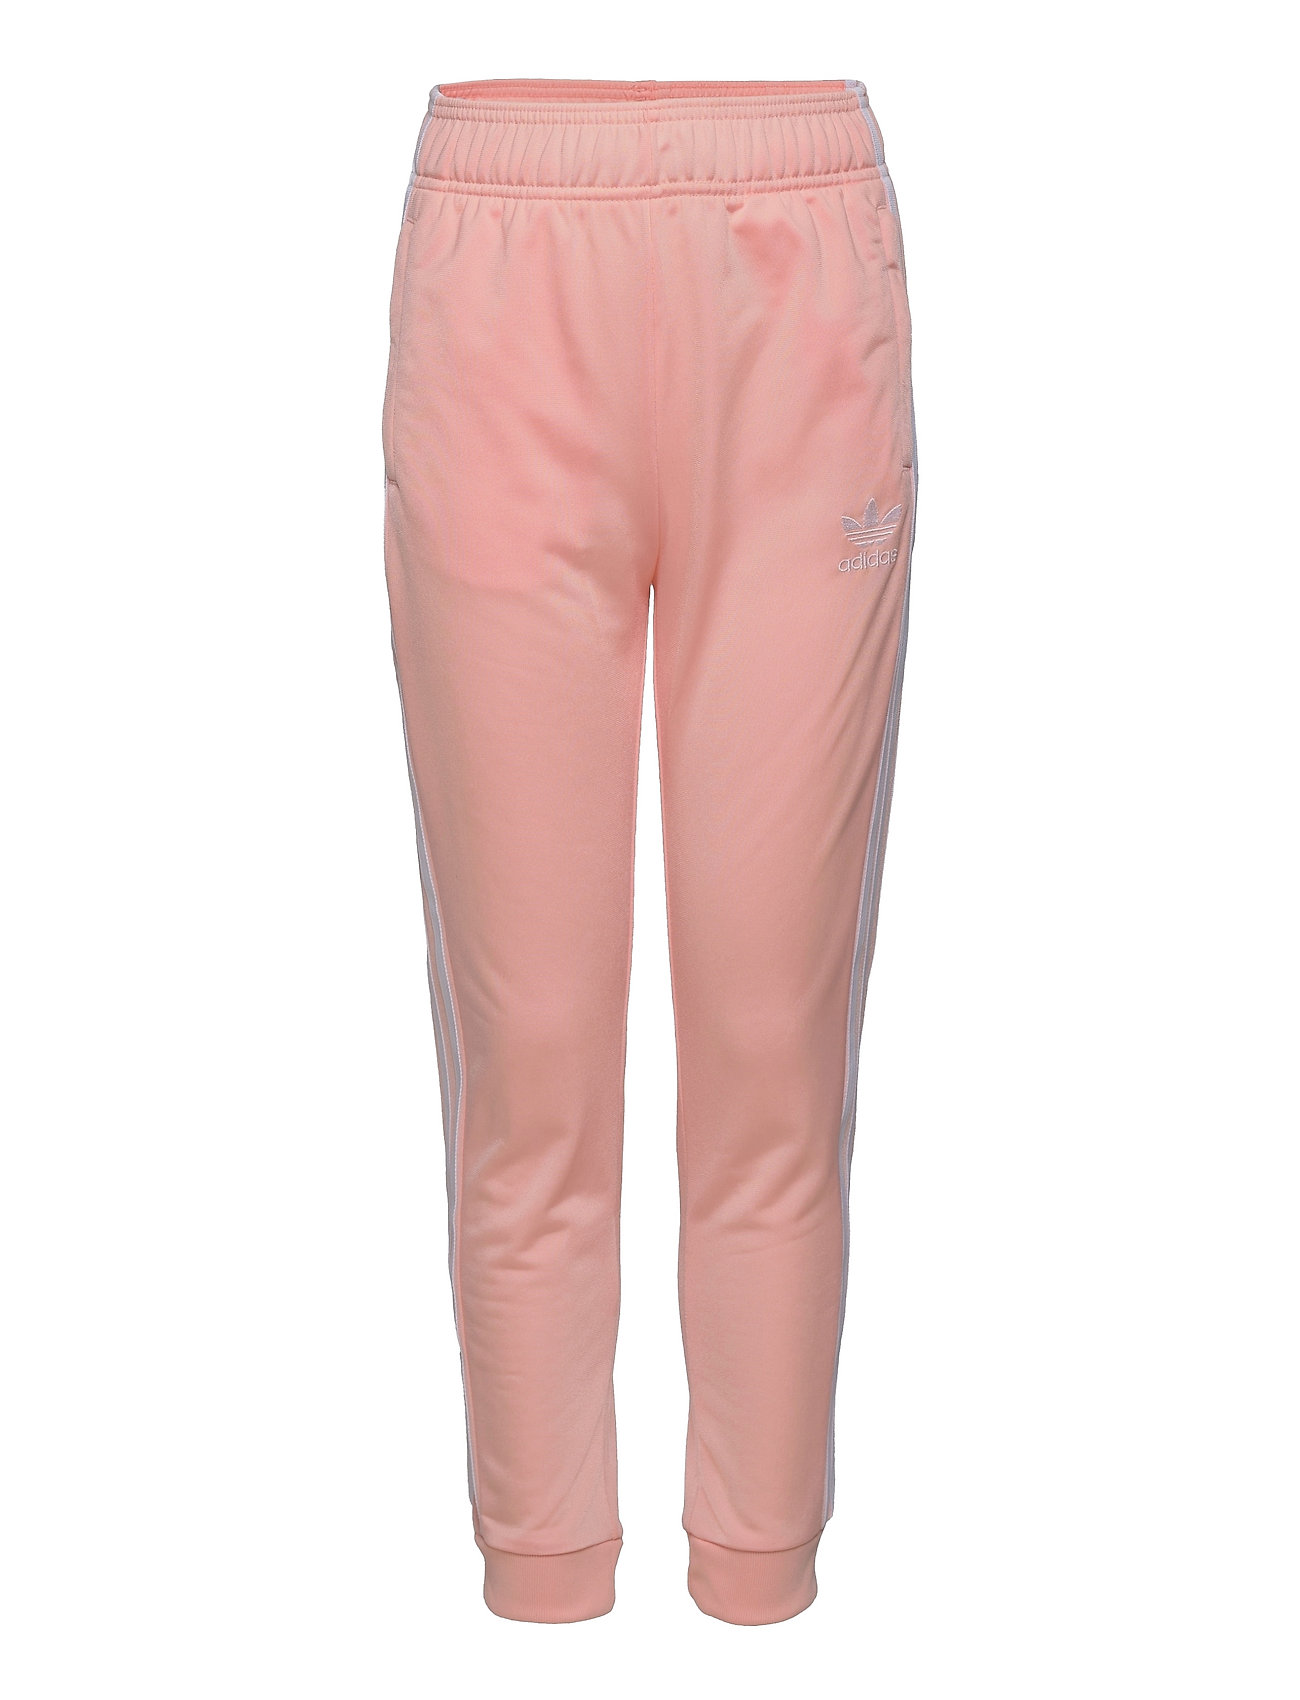 Adicolor Superstar Track Pants Collegehousut Olohousut Vaaleanpunainen Adidas Originals, adidas Originals